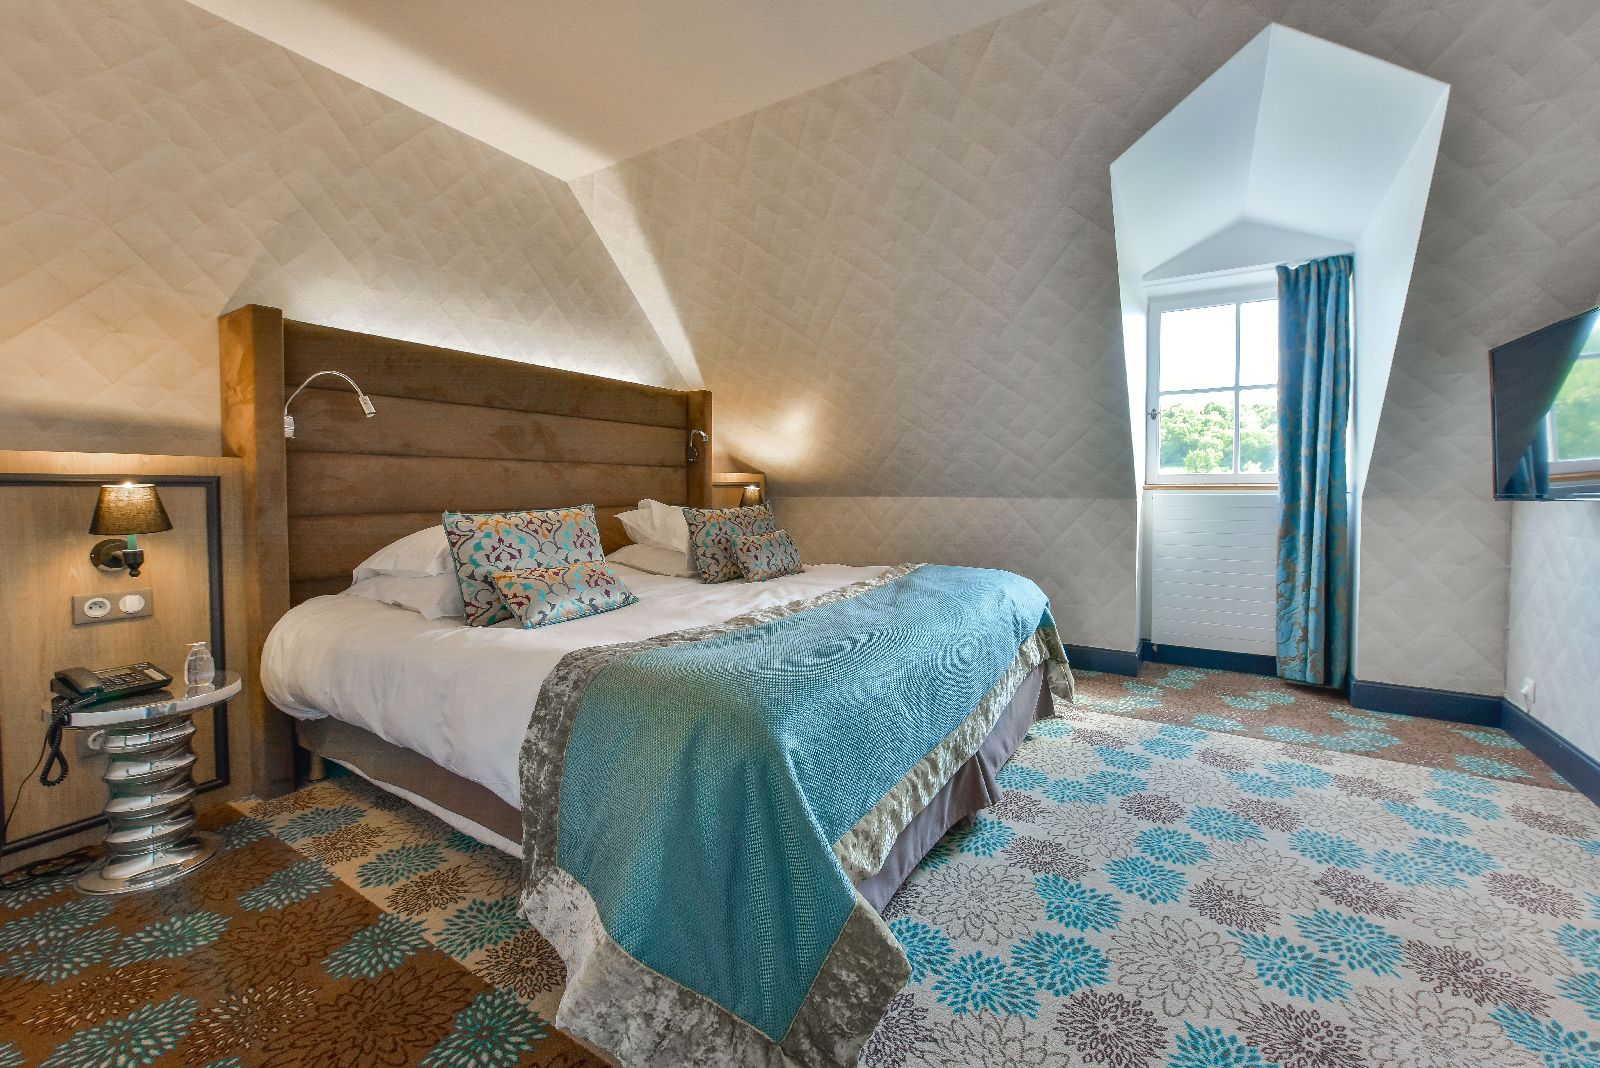 golf-expedition-golf-reis-Frankrijk-Bourgogne-Chateau-de-Chailly-slaapkamer-uitzicht-bed-slapen-luxe.jpg